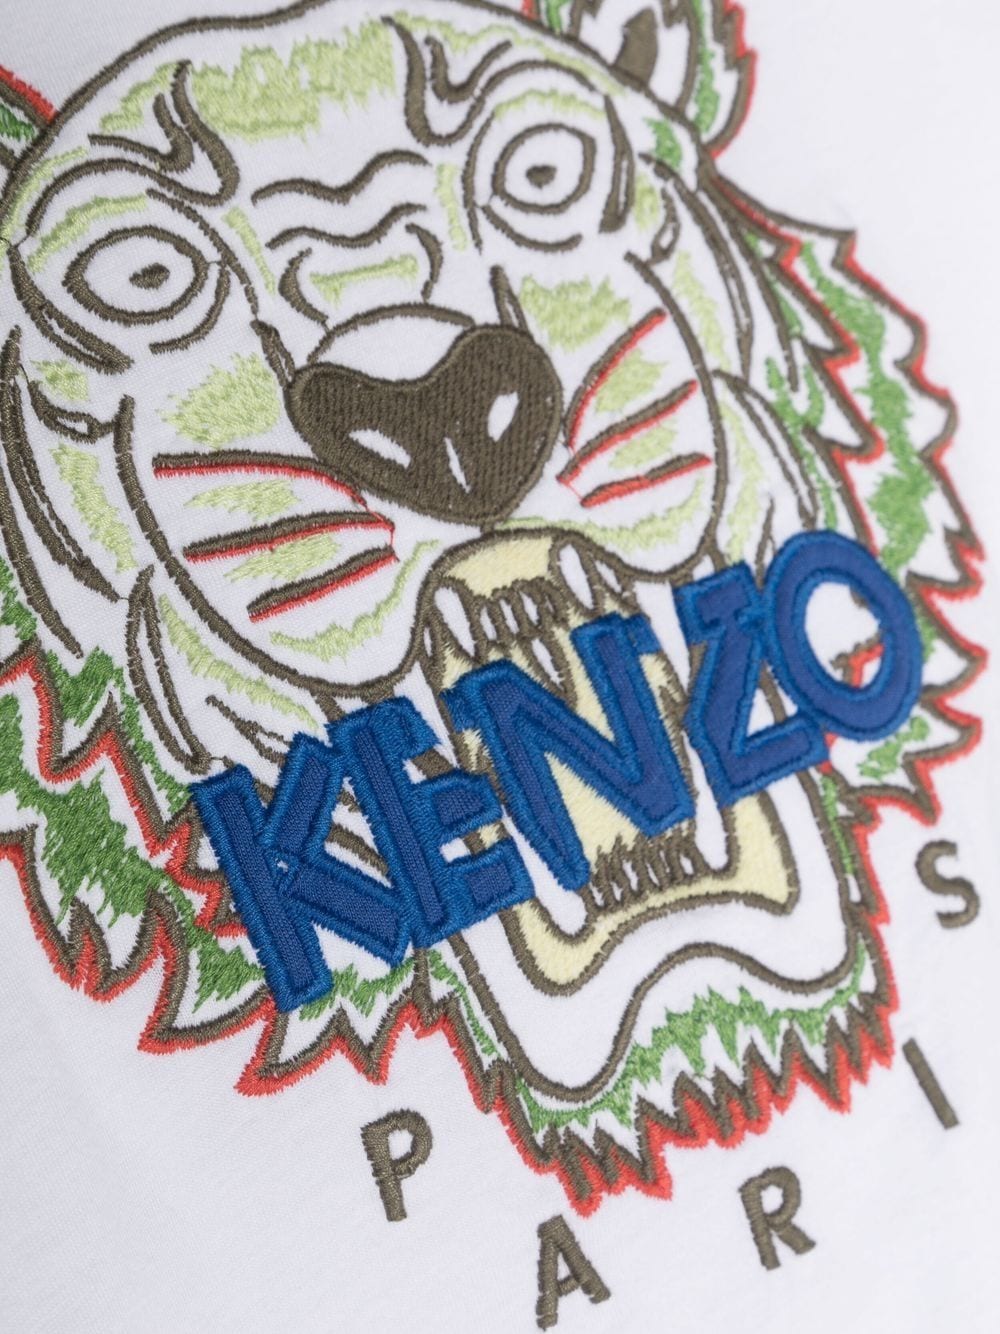 Kenzo Kid's Tiger Tee Short Sleeves T Shirt - Color: White - Kids Premium Clothing -